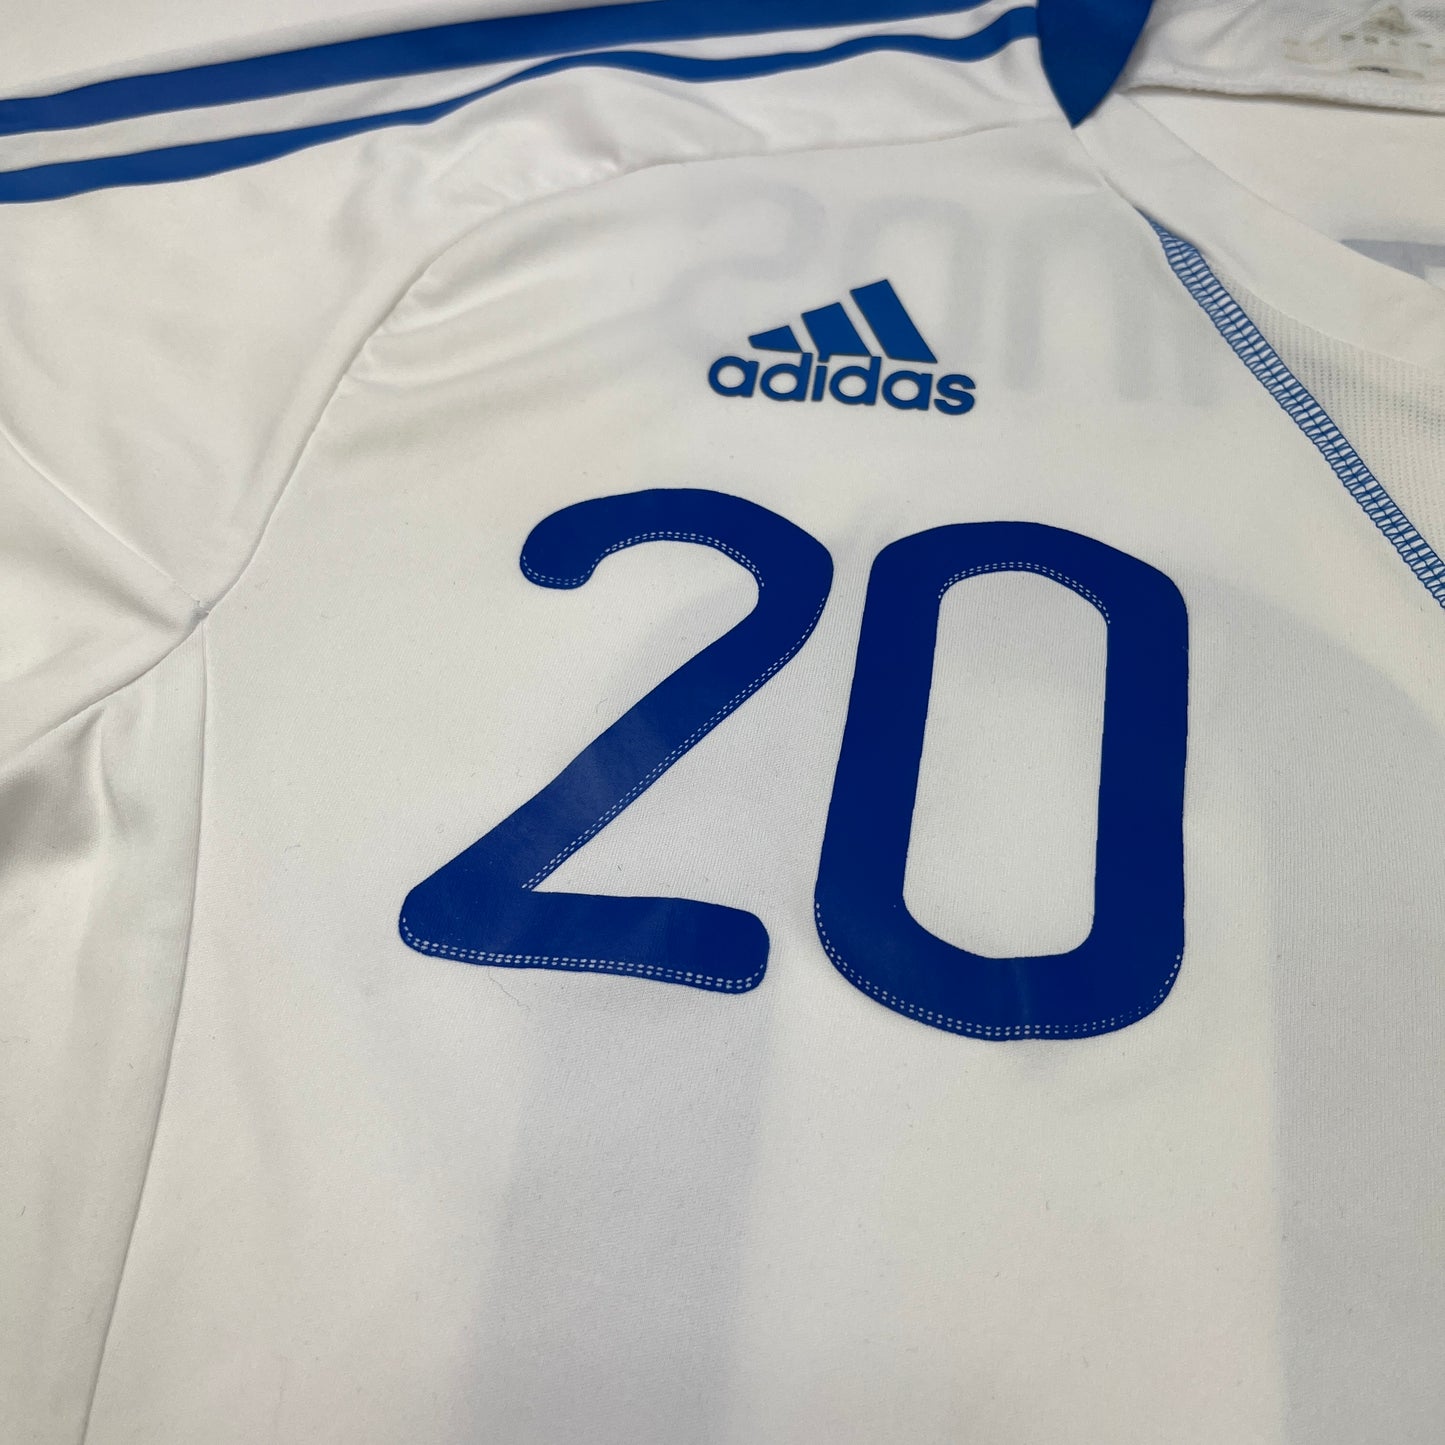 01888 Adidas Greek National Soccer Team 2010 Pantolis Kapetanos Home Jerseys ( signed )